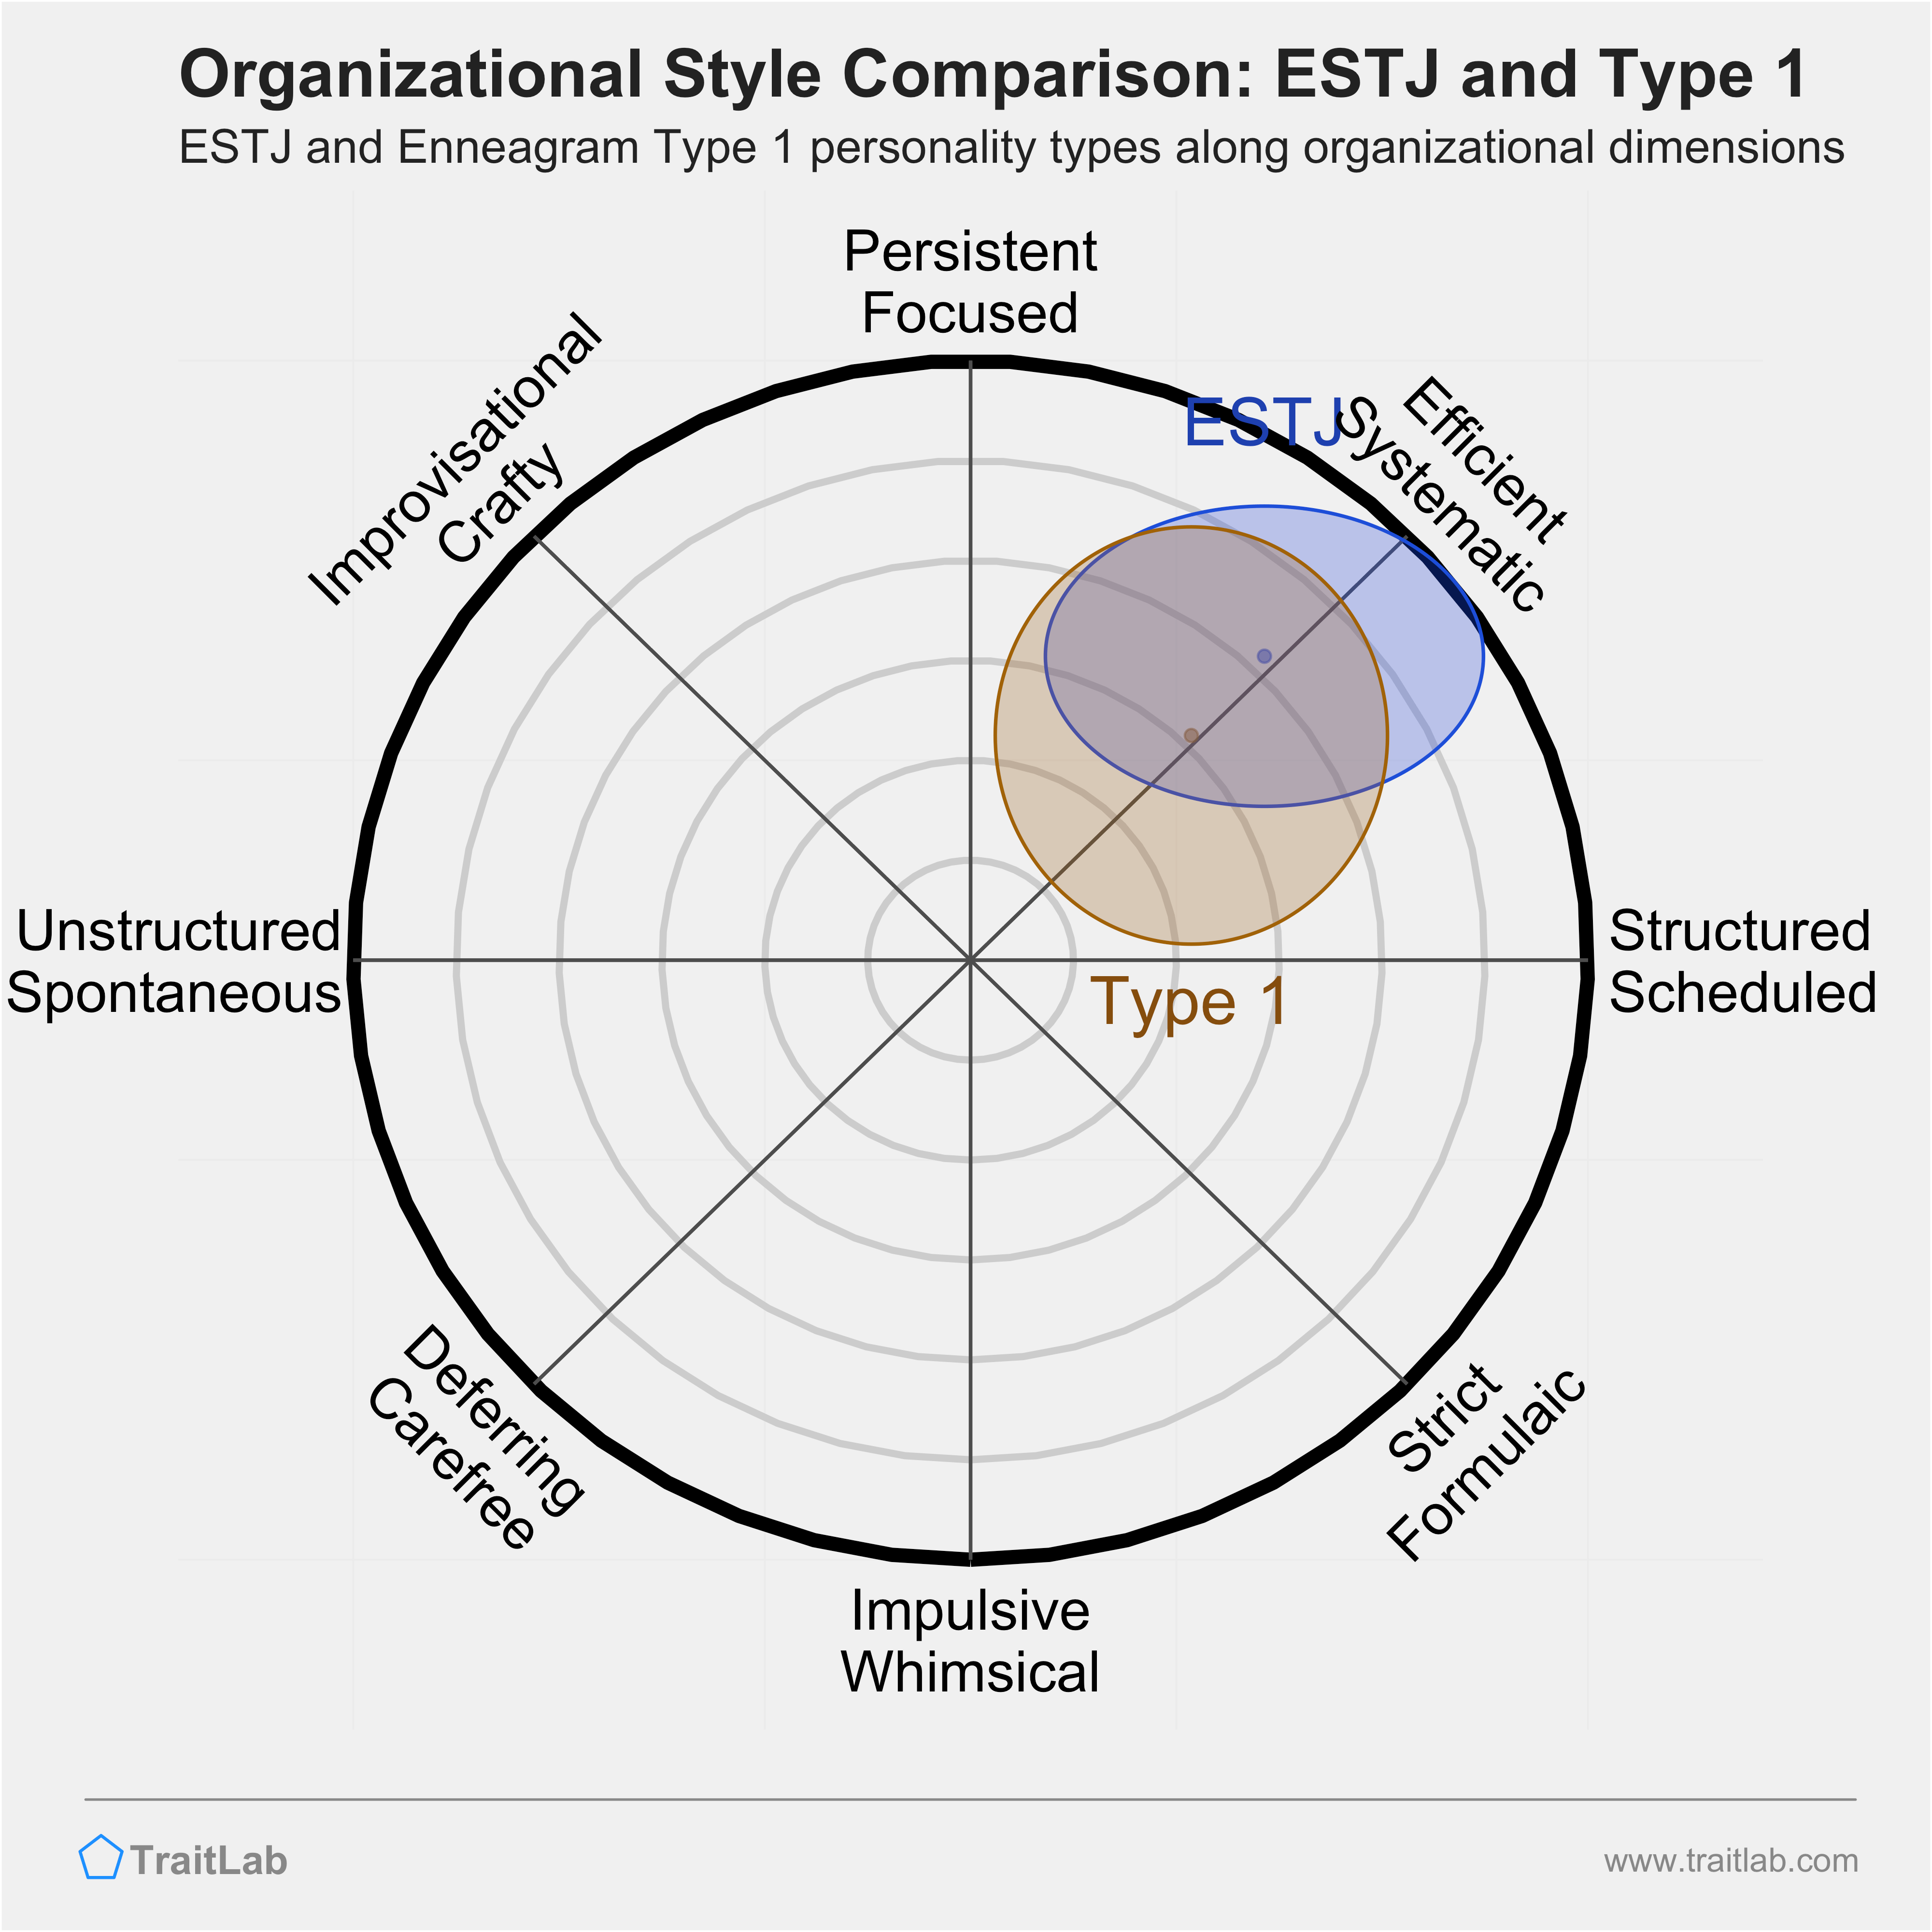 ESTJ and Type 1 comparison across organizational dimensions